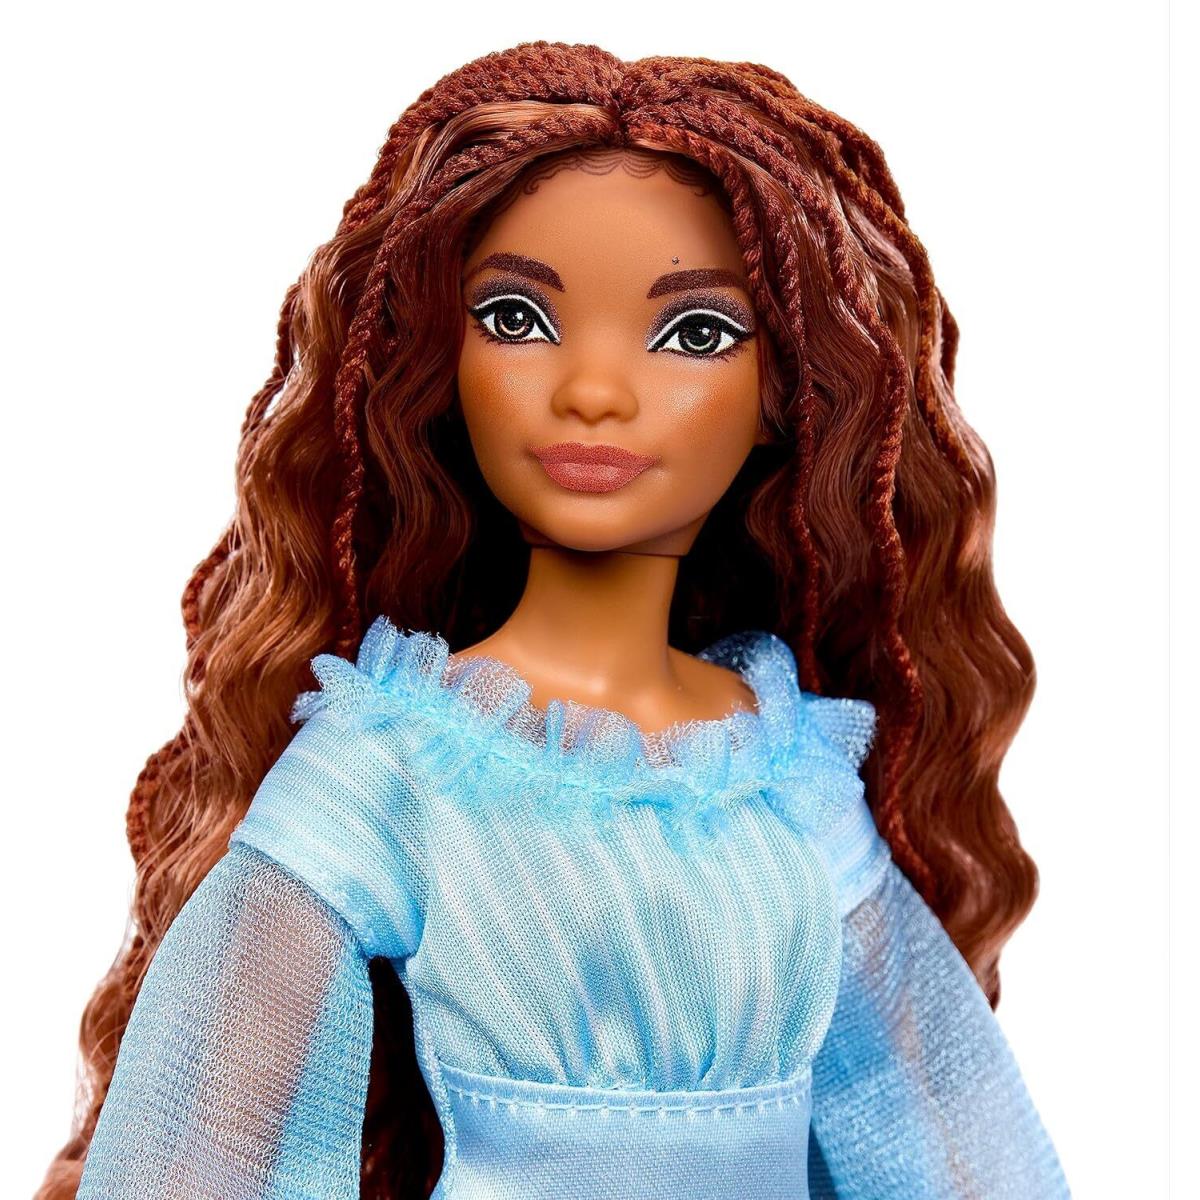 Disney Princess by Mattel Scallop Blue Dress Singing Doll